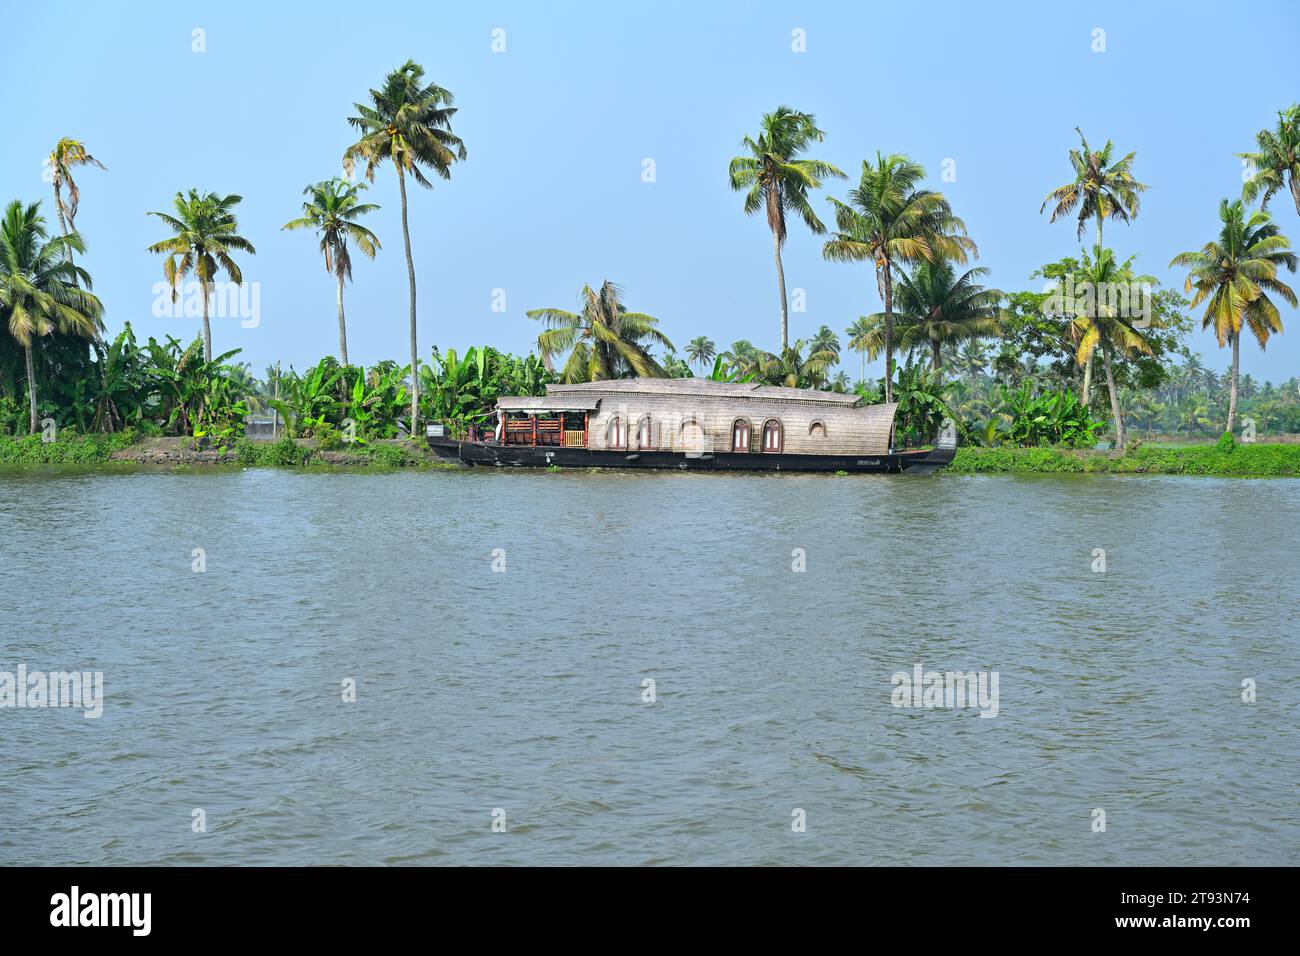 Leeres Hausboot hat am Ufer des Vembanad-Sees angedockt Stockfoto